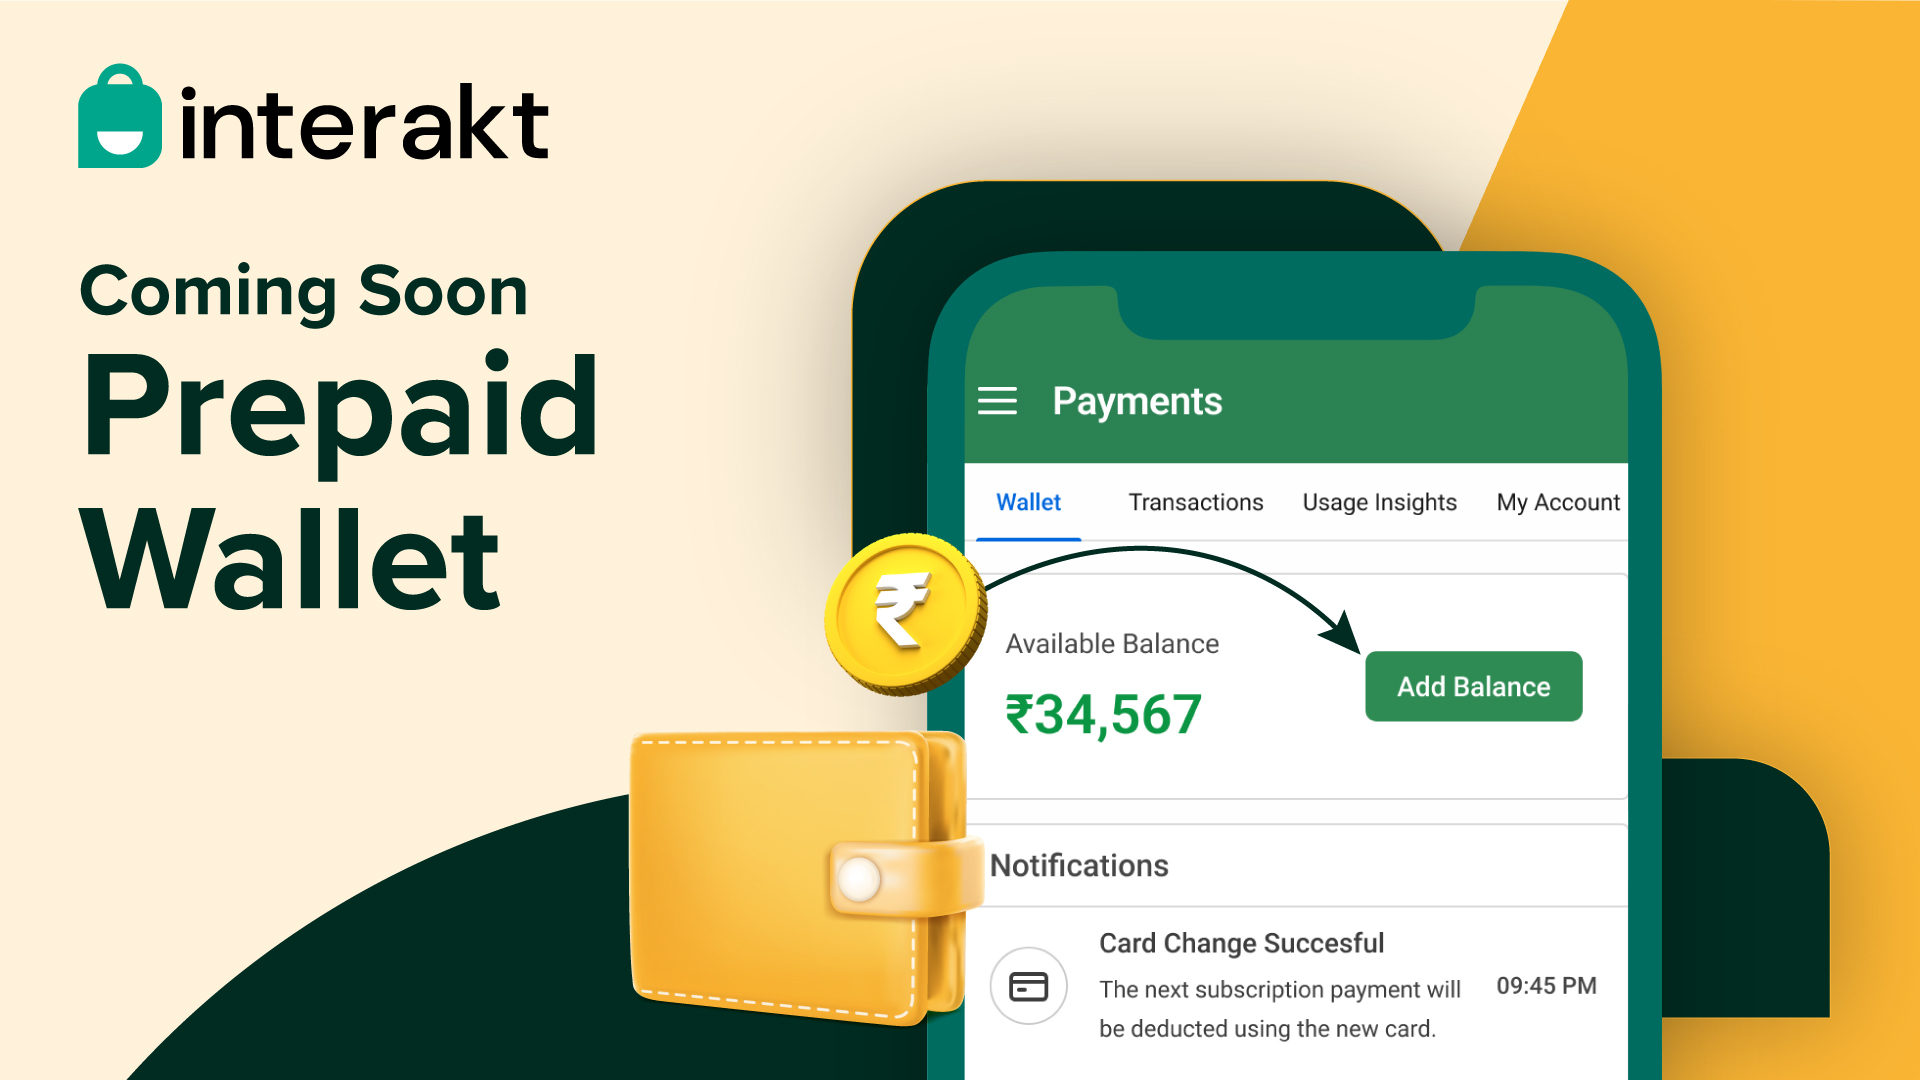 WhatsApp for Prepaid Wallet | Interakt